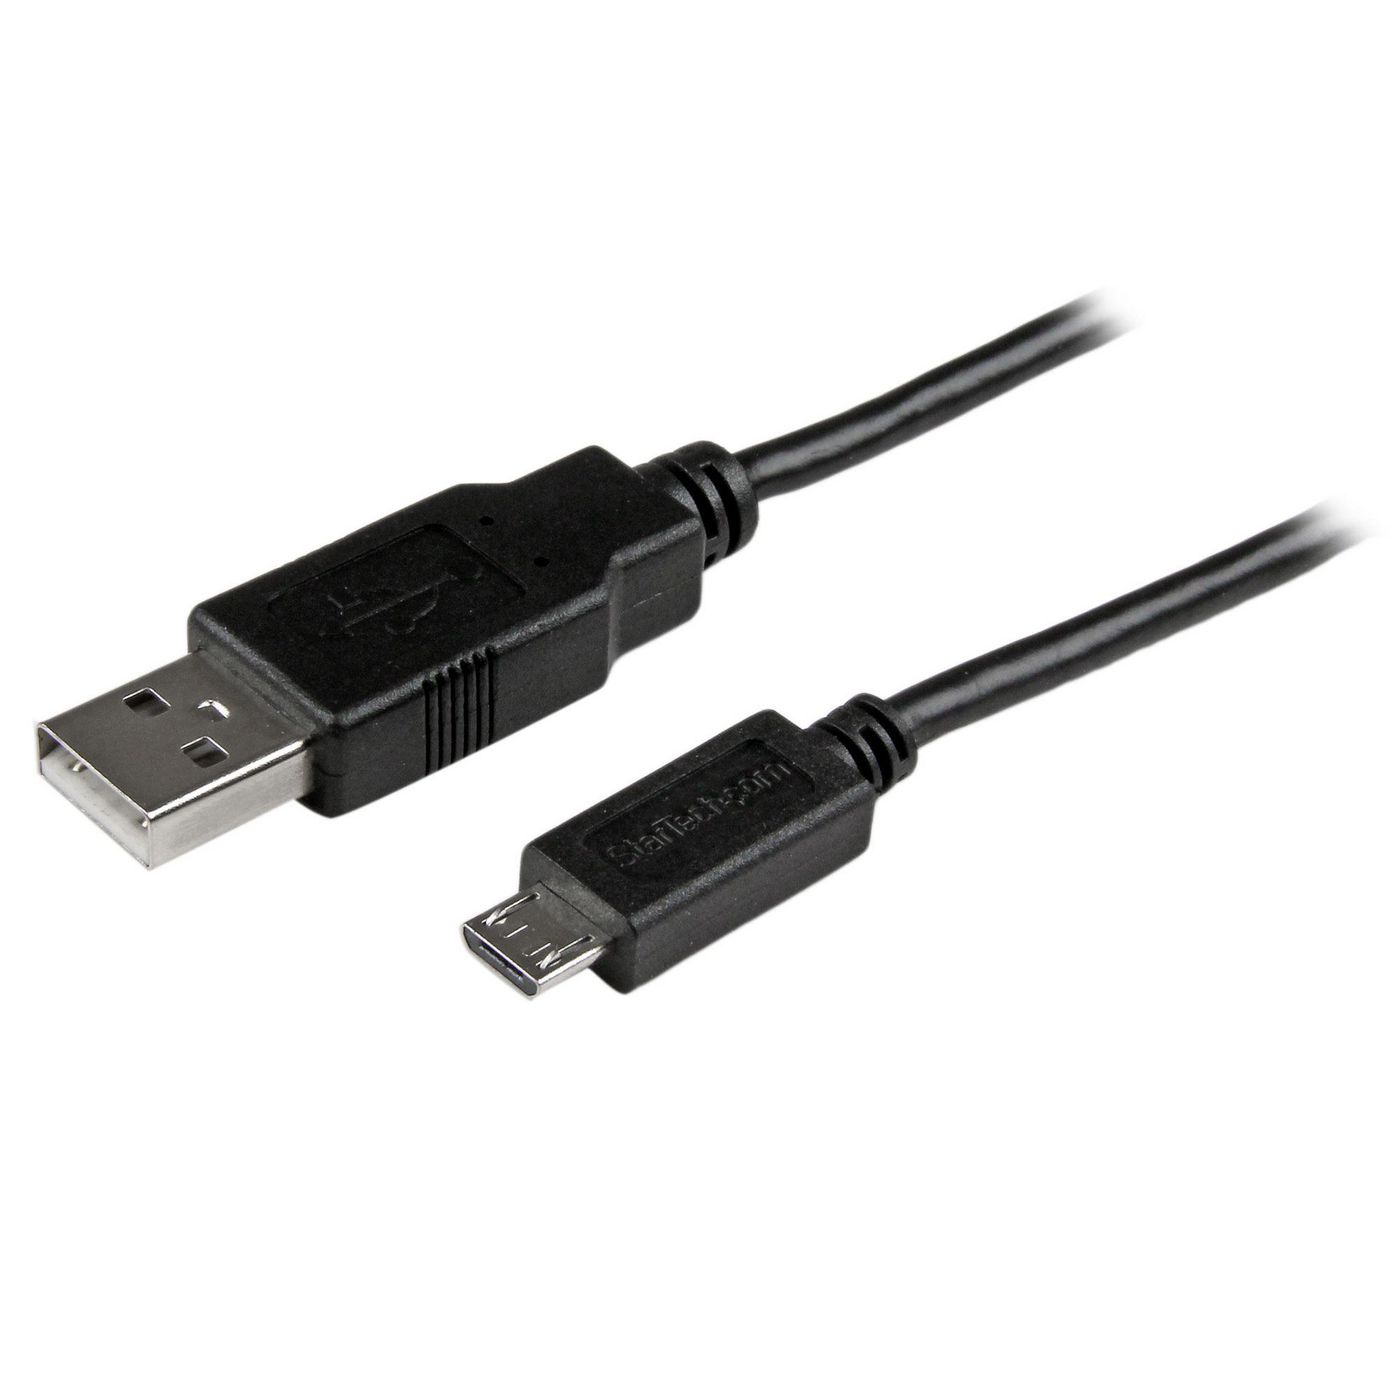 STARTECH.COM 2m Micro USB Ladekabel für Android Smartphones und Tablets - USB A auf Micro B Kabel /